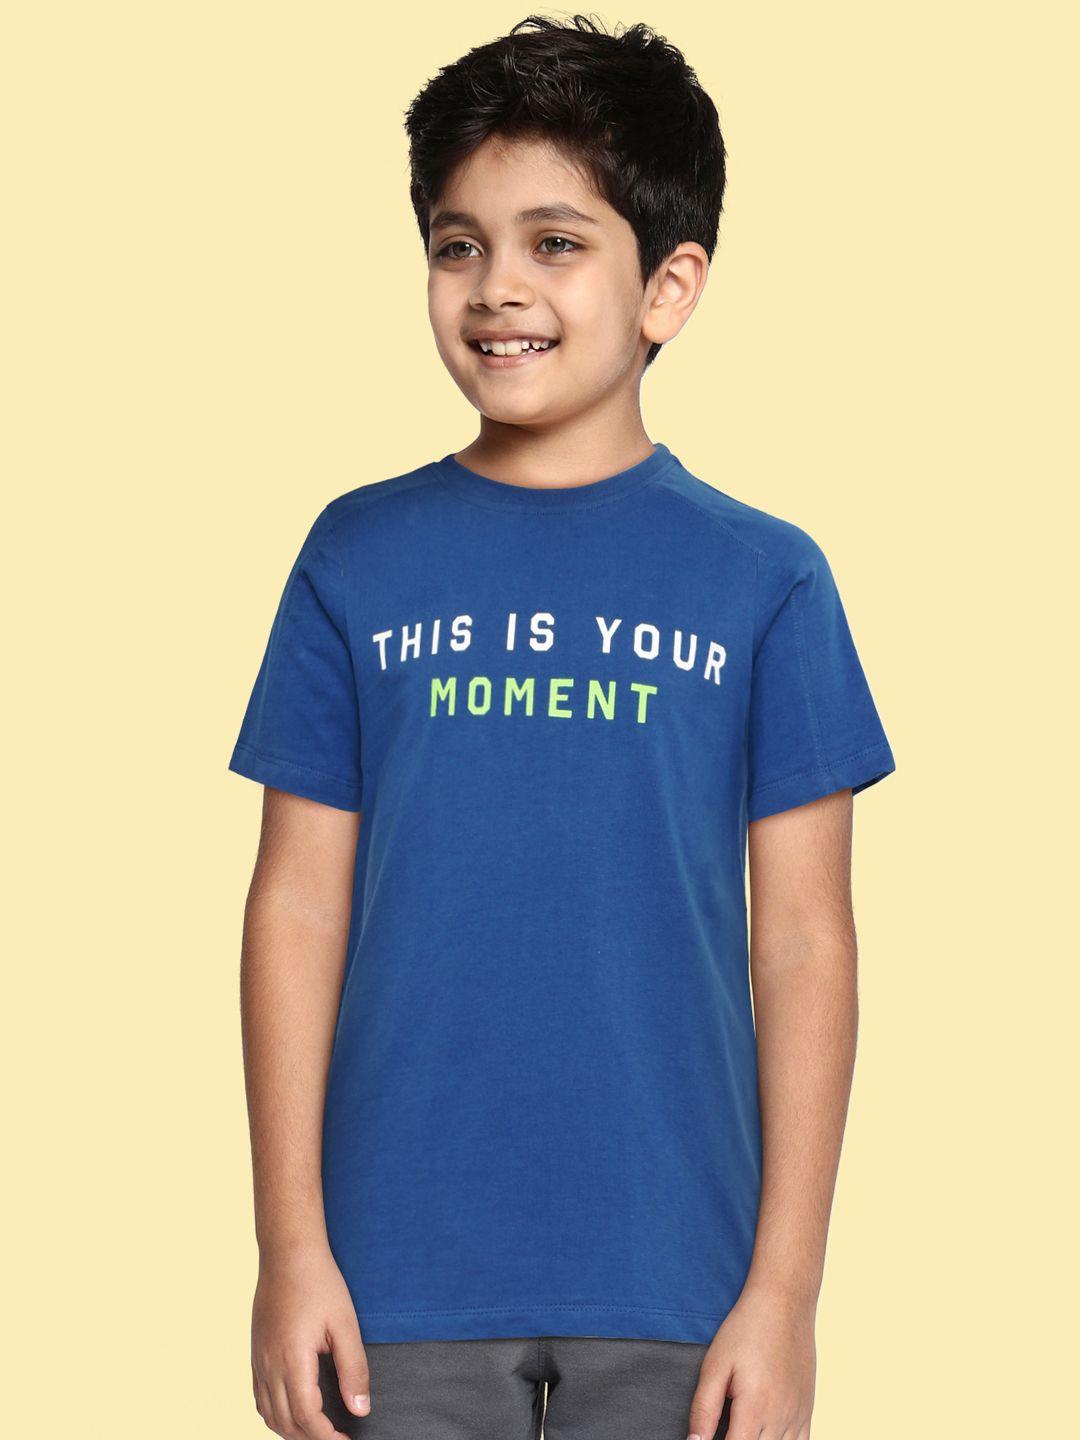 hrx by hrithik roshan boys teal blue typography printed lifestyle t-shirt